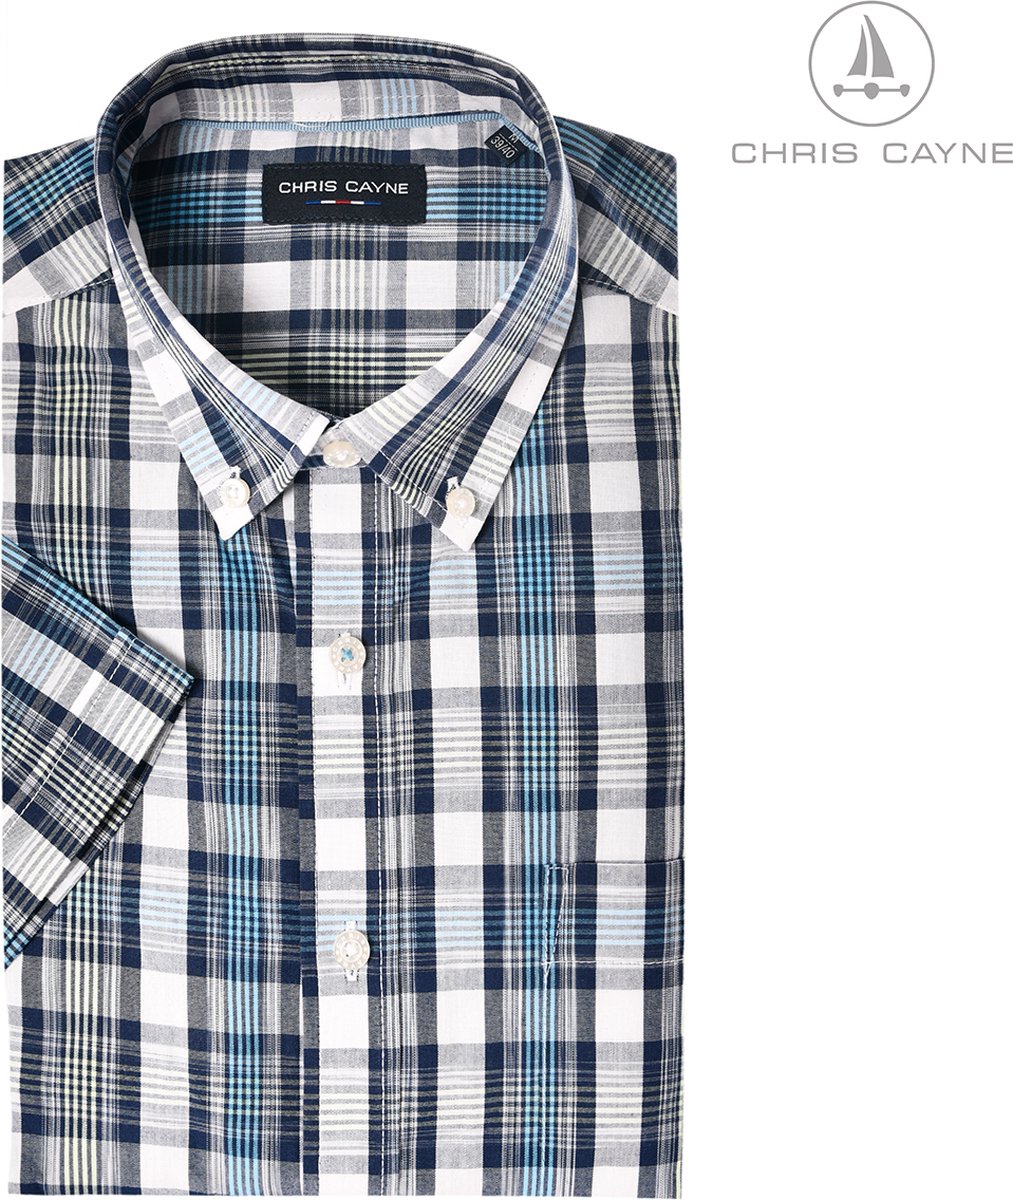 Chris Cayne heren blouse - overhemd 2230 blauwe ruit - KM - maat M